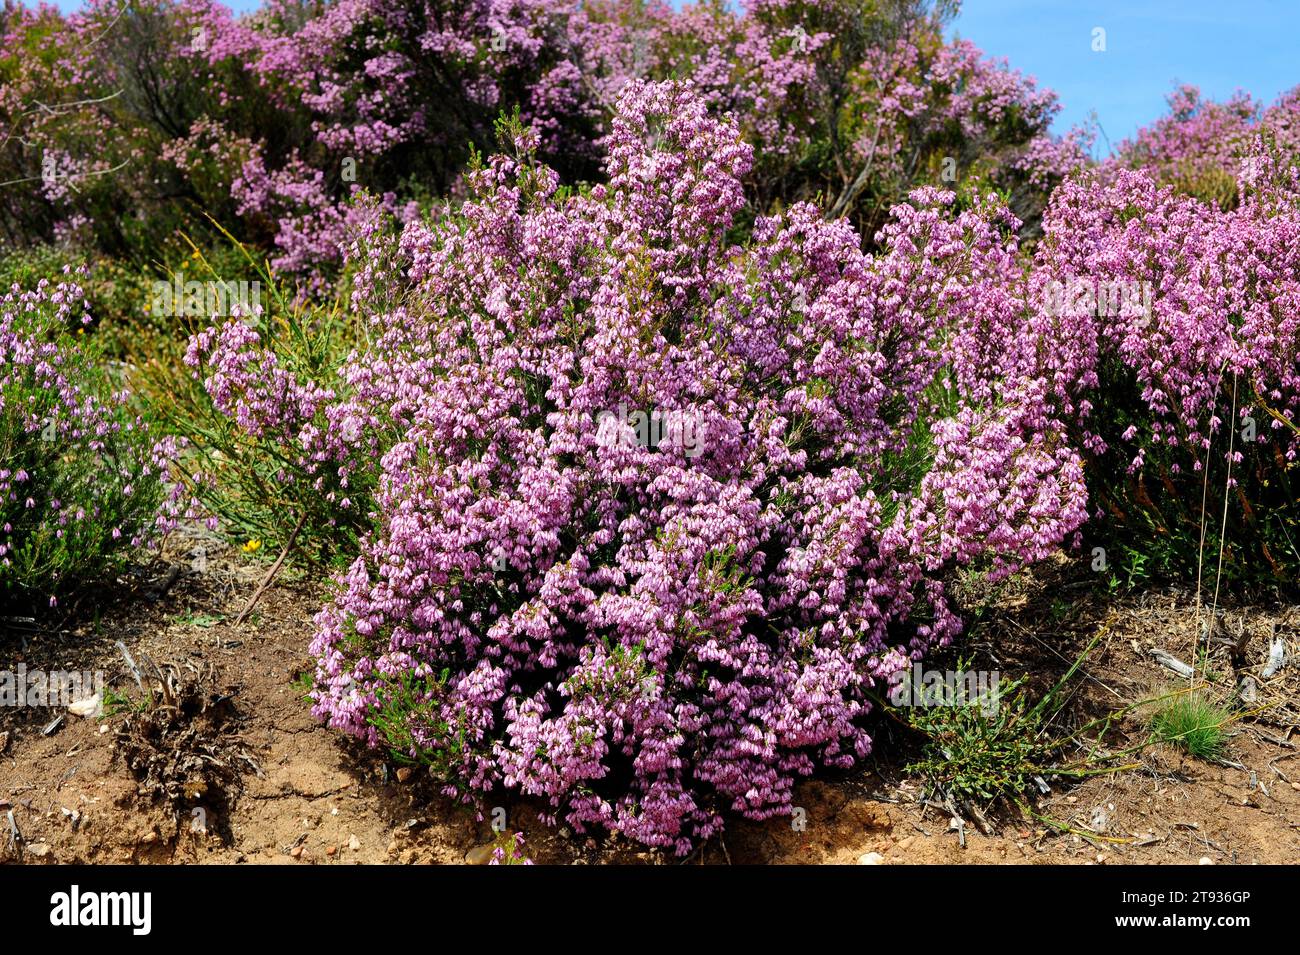 Brezo rubio (Erica australis) is a shrub endemic to western Iberian Peninsula and northwest Africa. This photo was taken in Las Medulas, Leon province Stock Photo